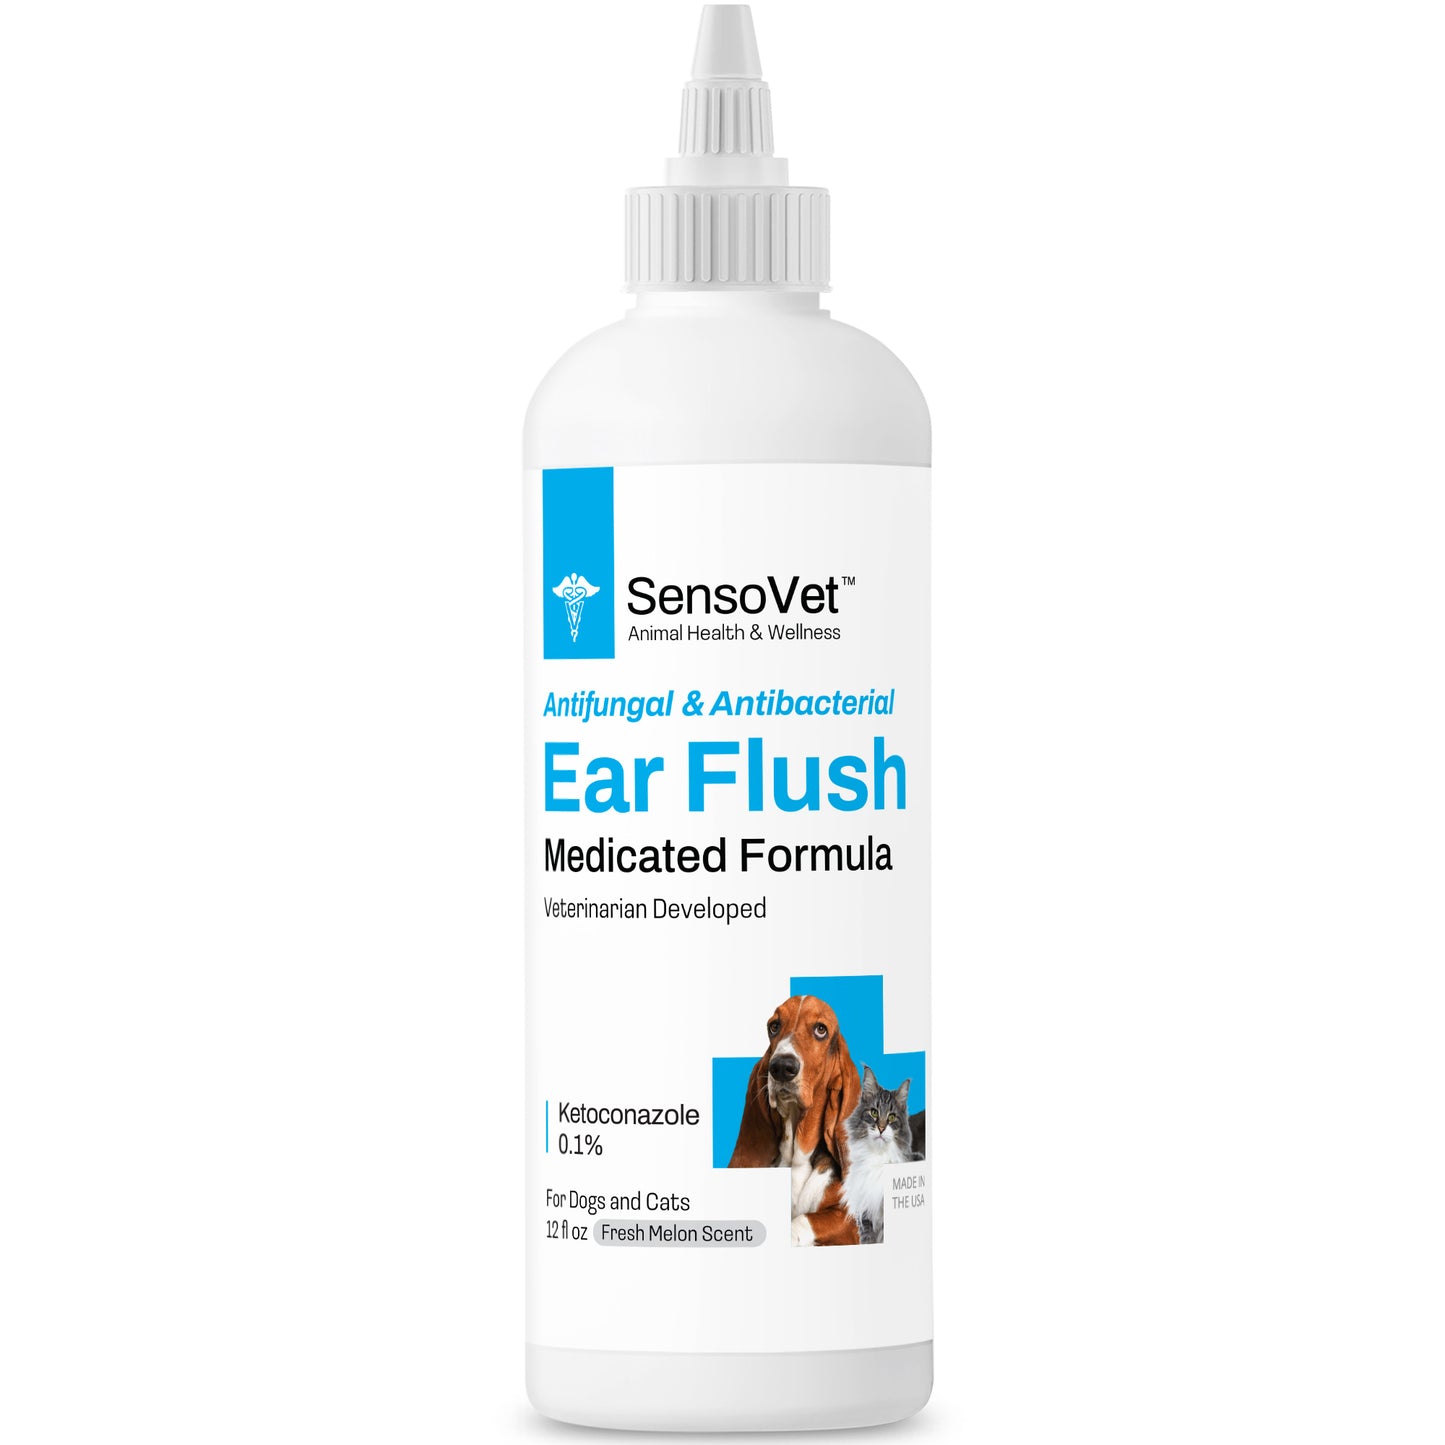 SensoVet Antifungal Antibacterial Medicated Ear Flush for dogs and cats